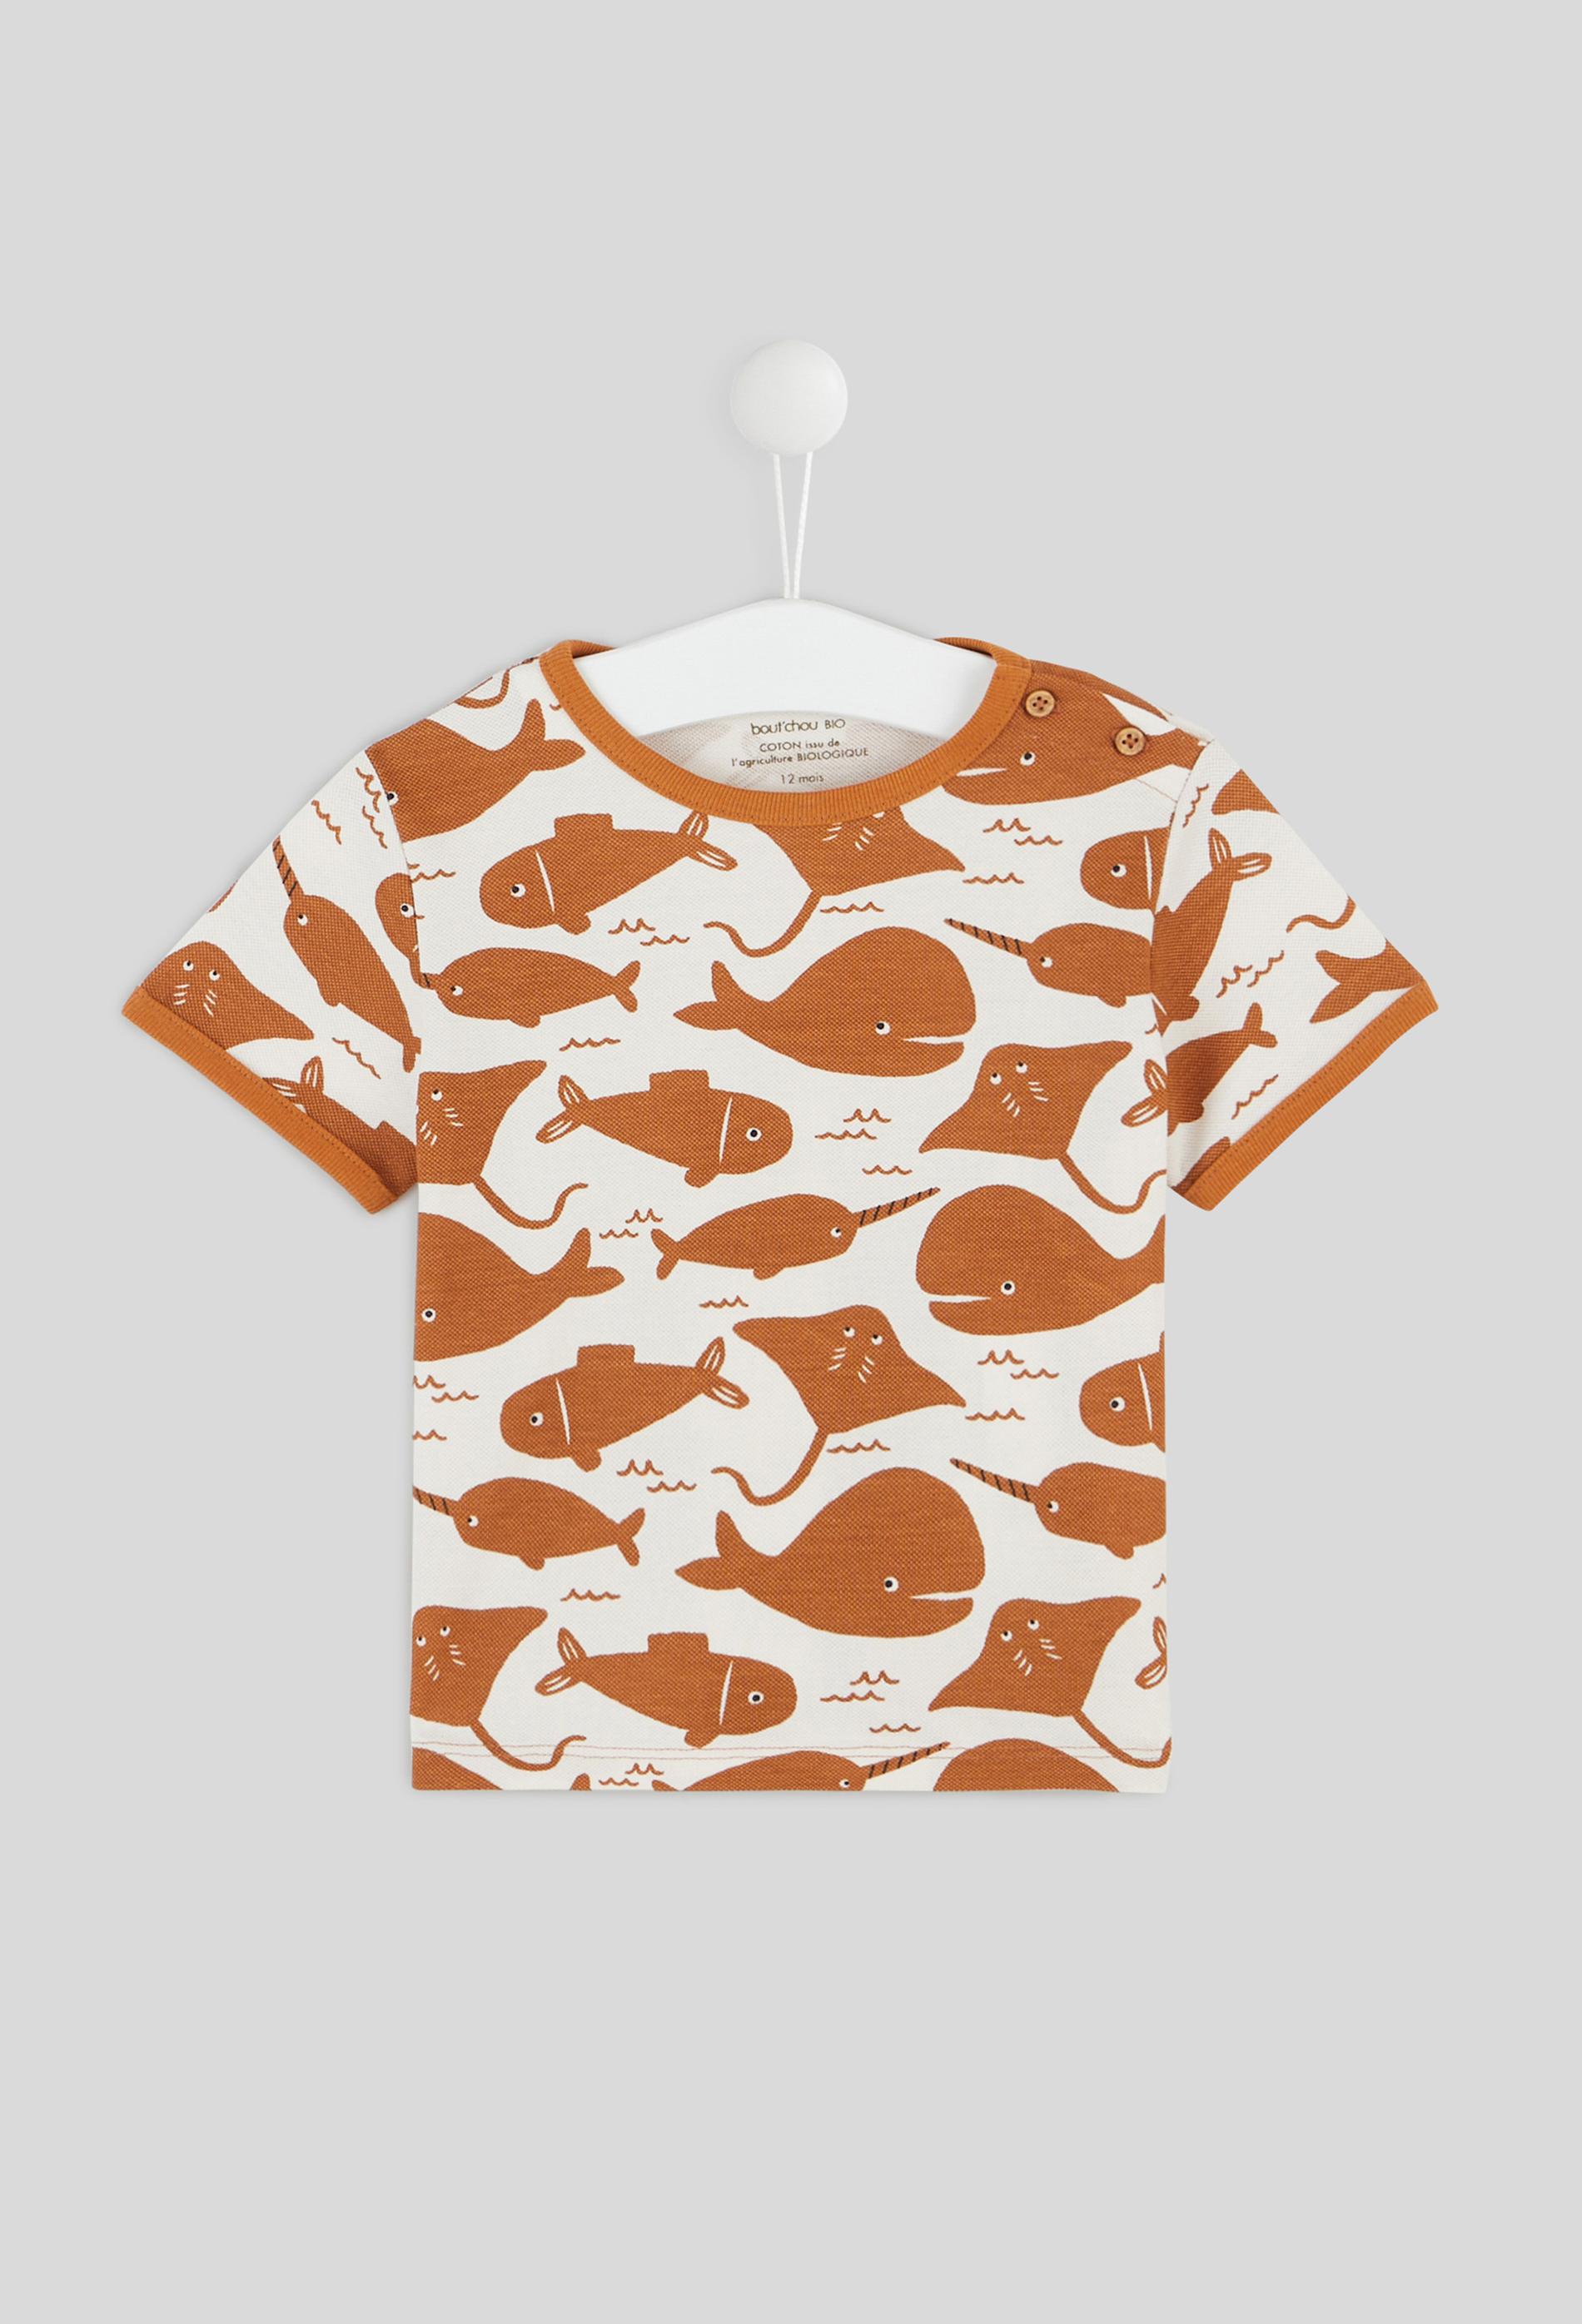 Tee-Shirt piqué imprimé animaux marins col rond manches courtes, garçon, en coton BIO, OEKO-TEX 6 mois brun clair